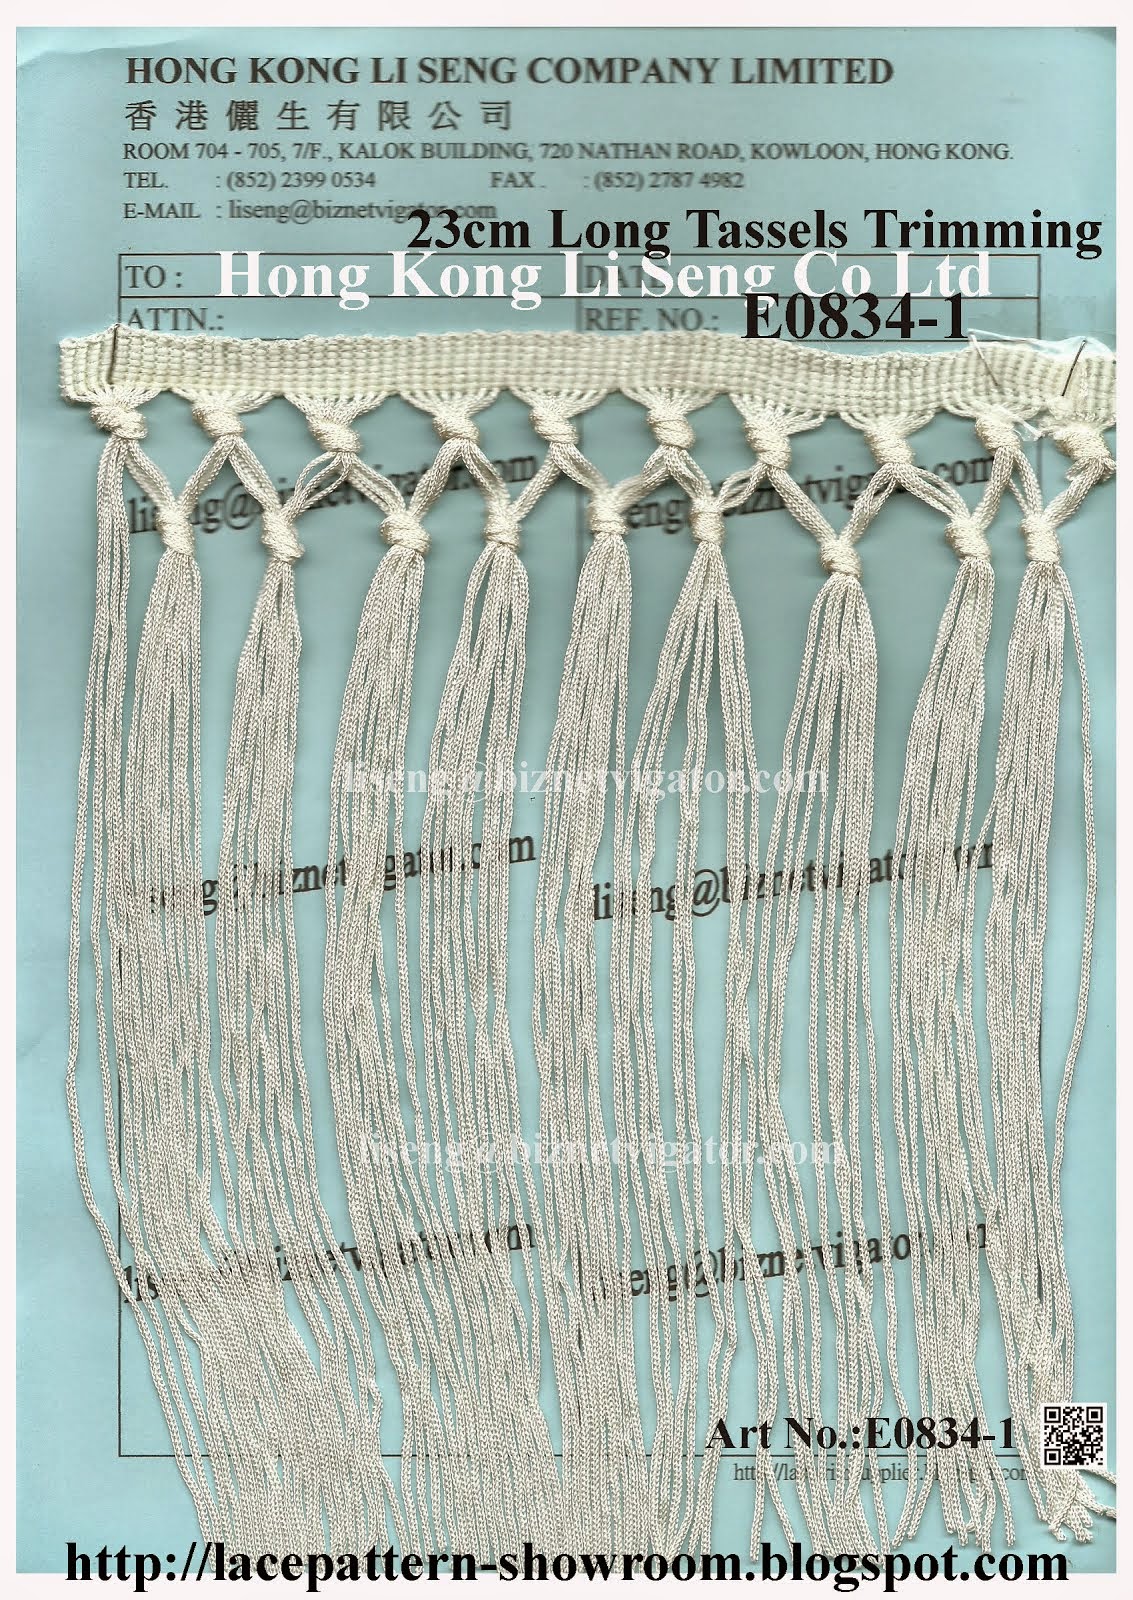 23cm Long Tassels Trimming Wholesale Manufacturer and Supplier - Hong Kong Li Seng Co Ltd